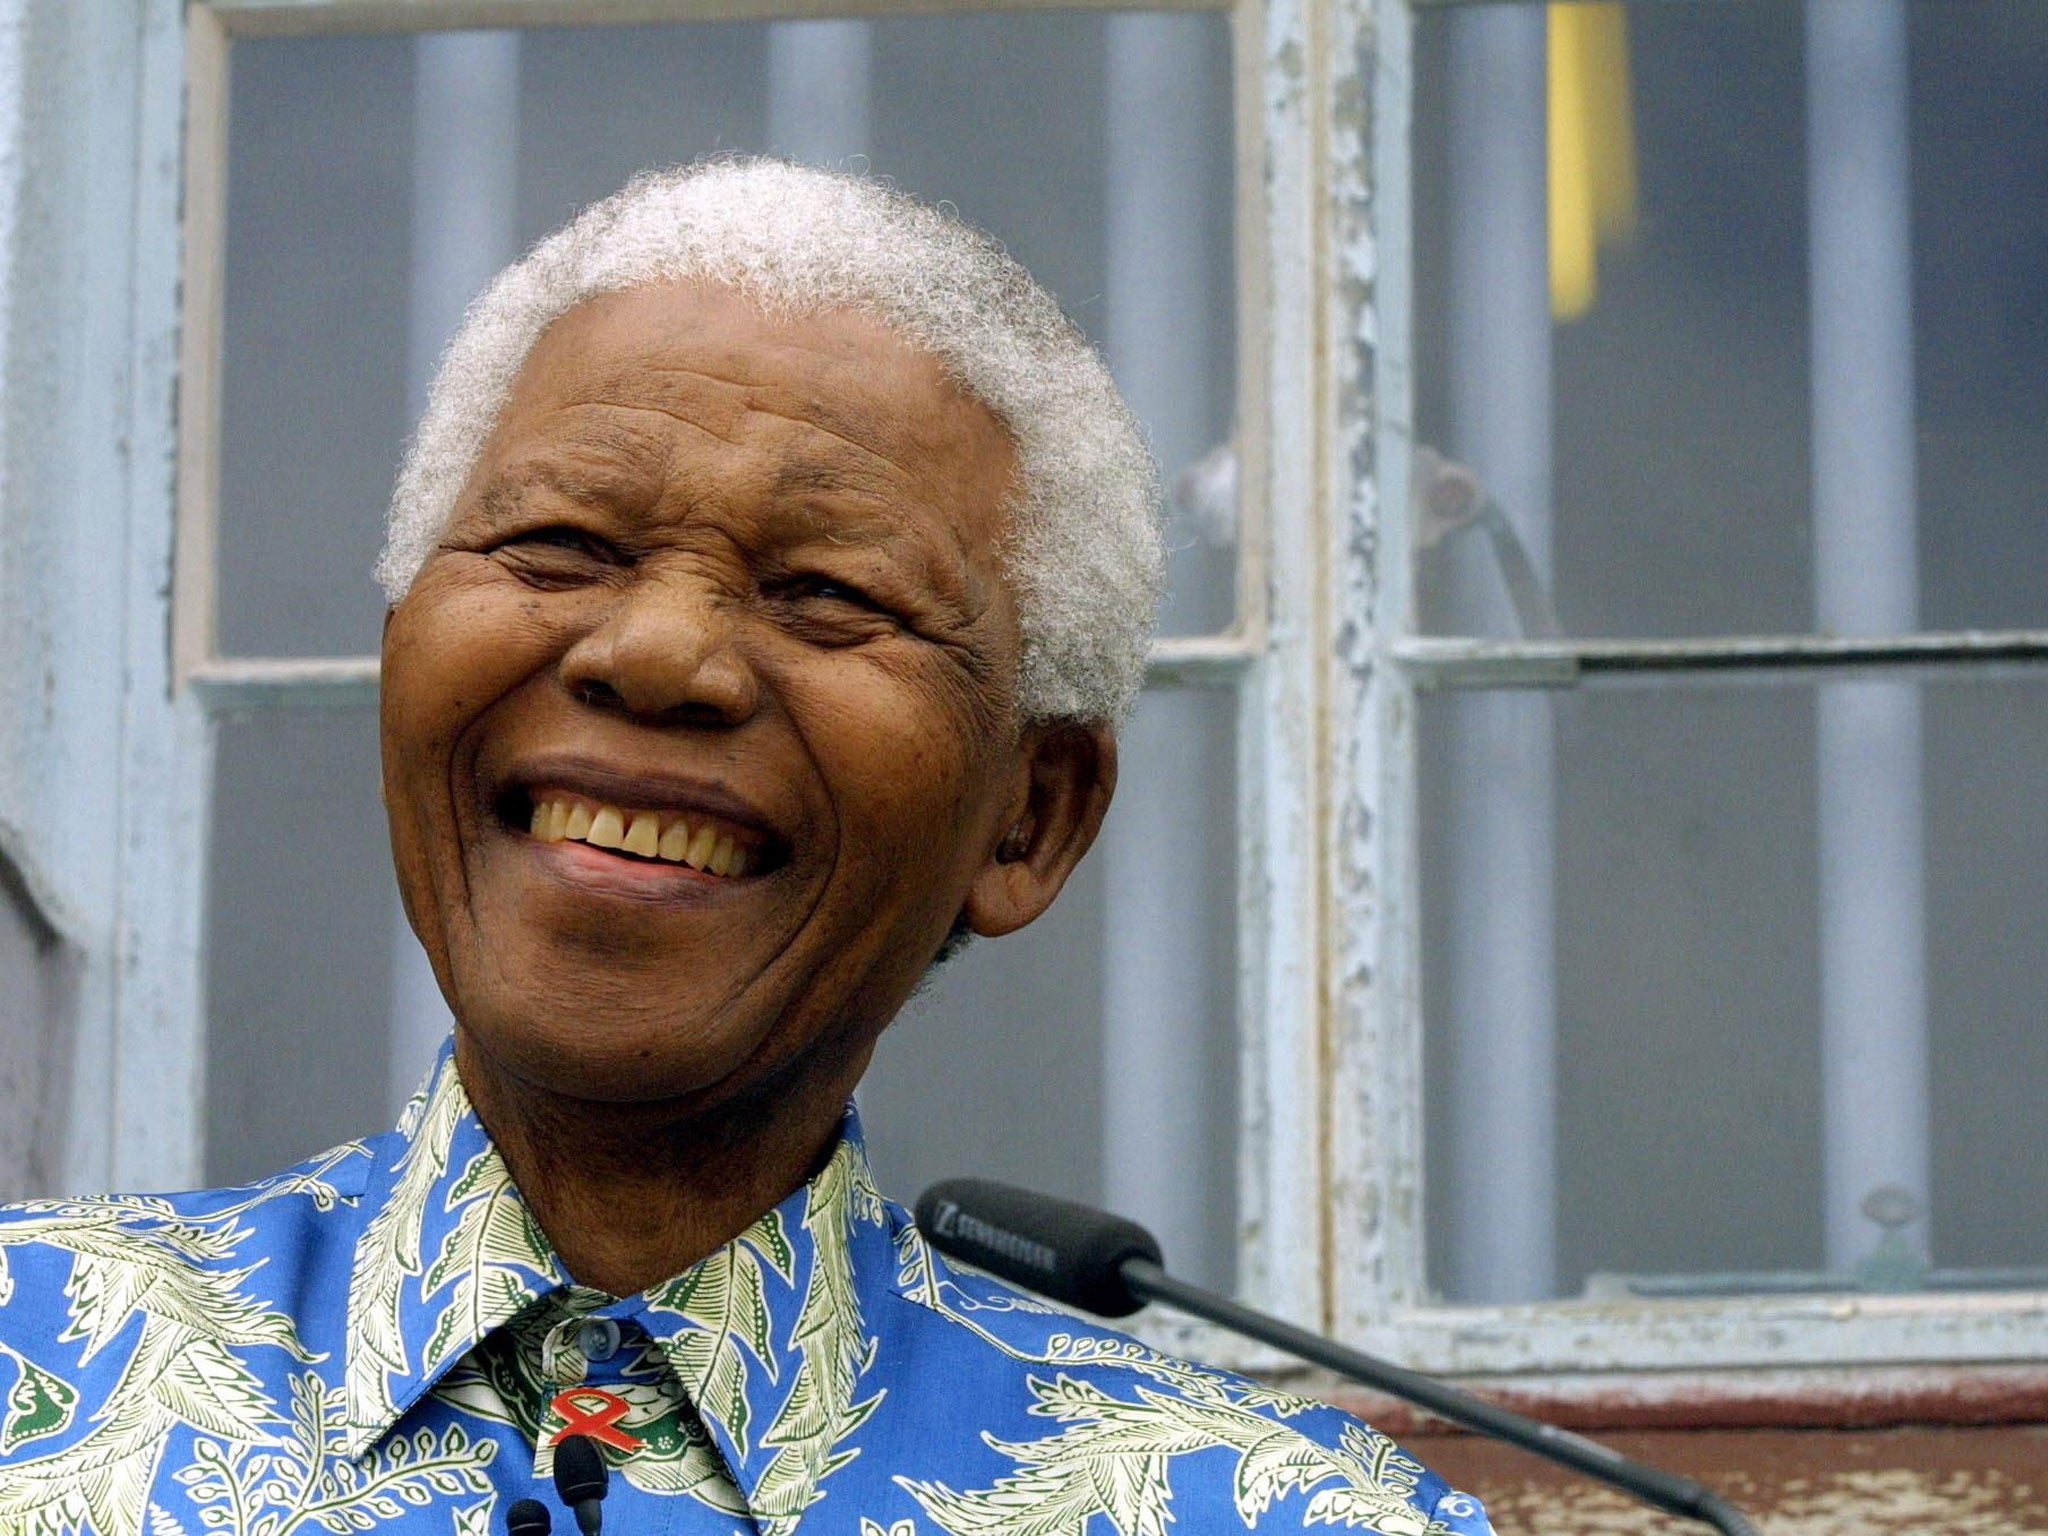 Mr Mandela was hospitalised for nearly three weeks in December